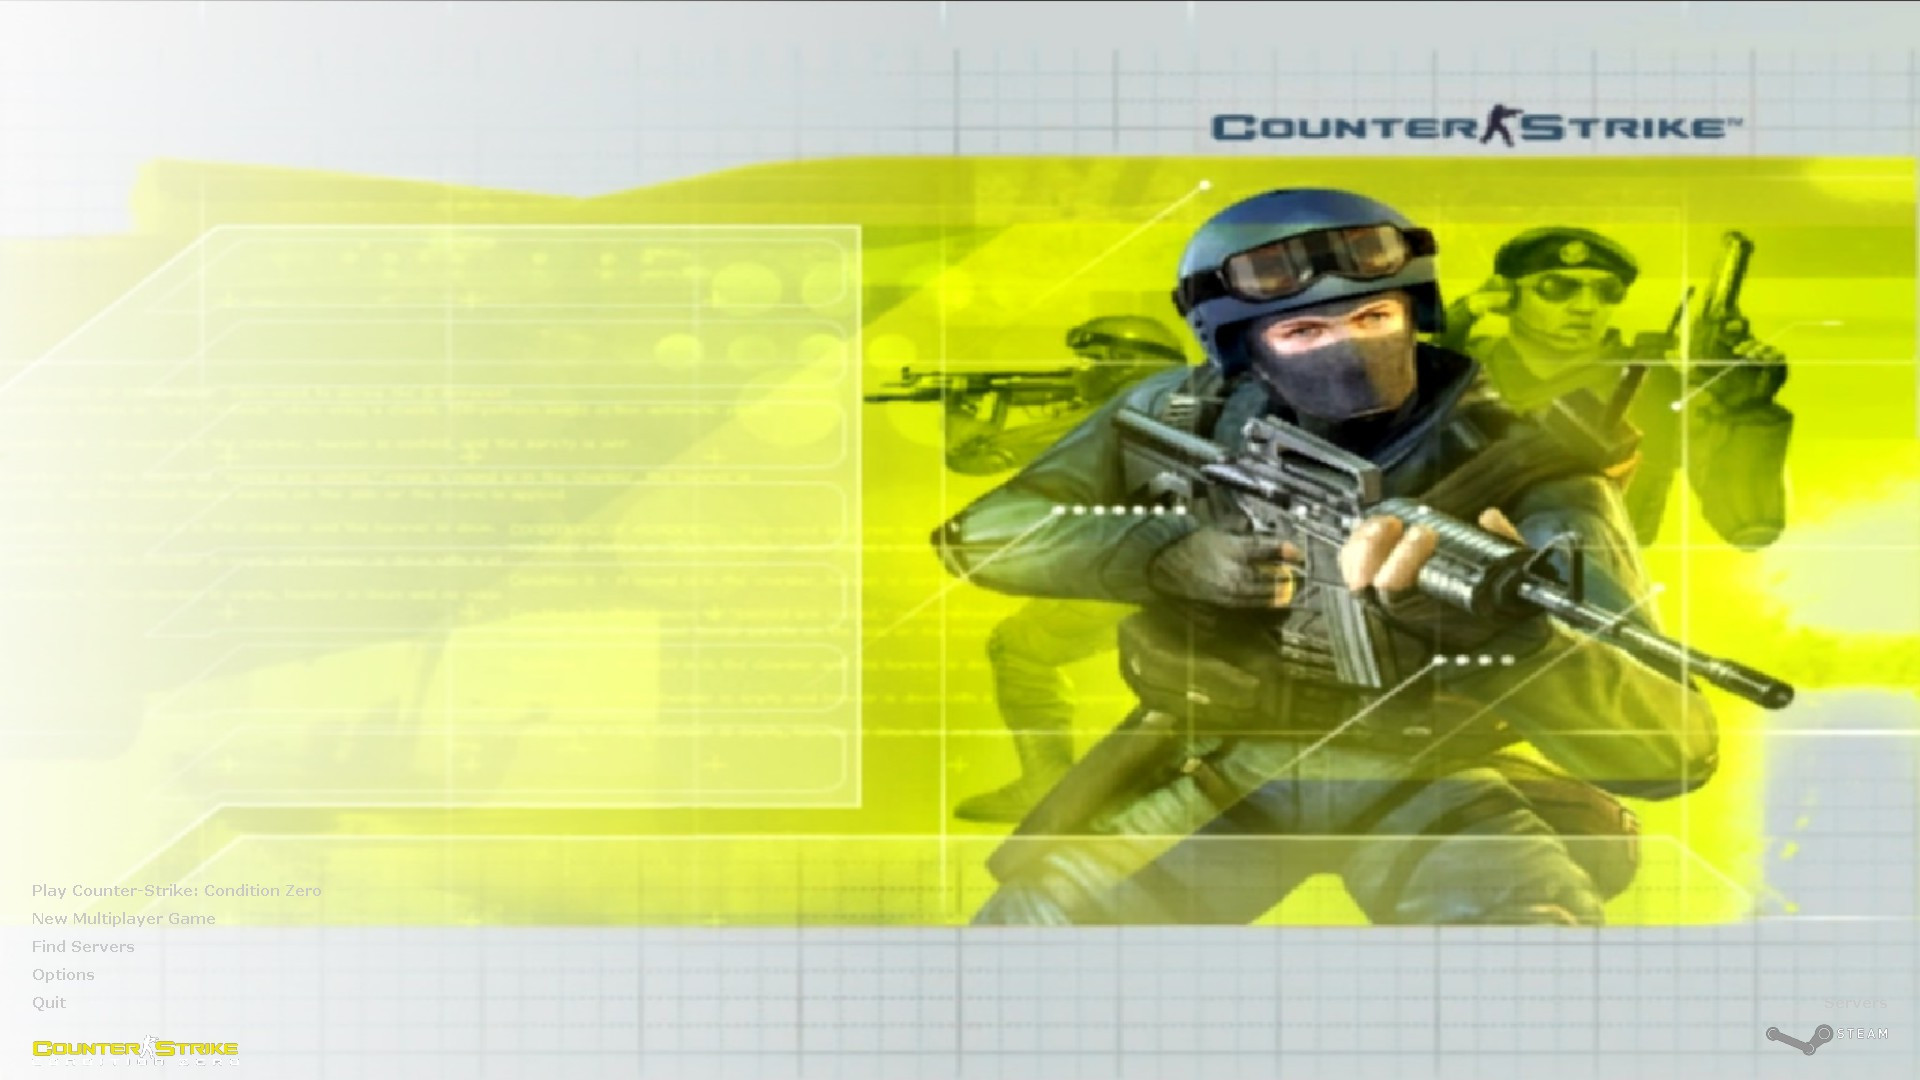 Counter-Strike: Condition Zero - Game servers 